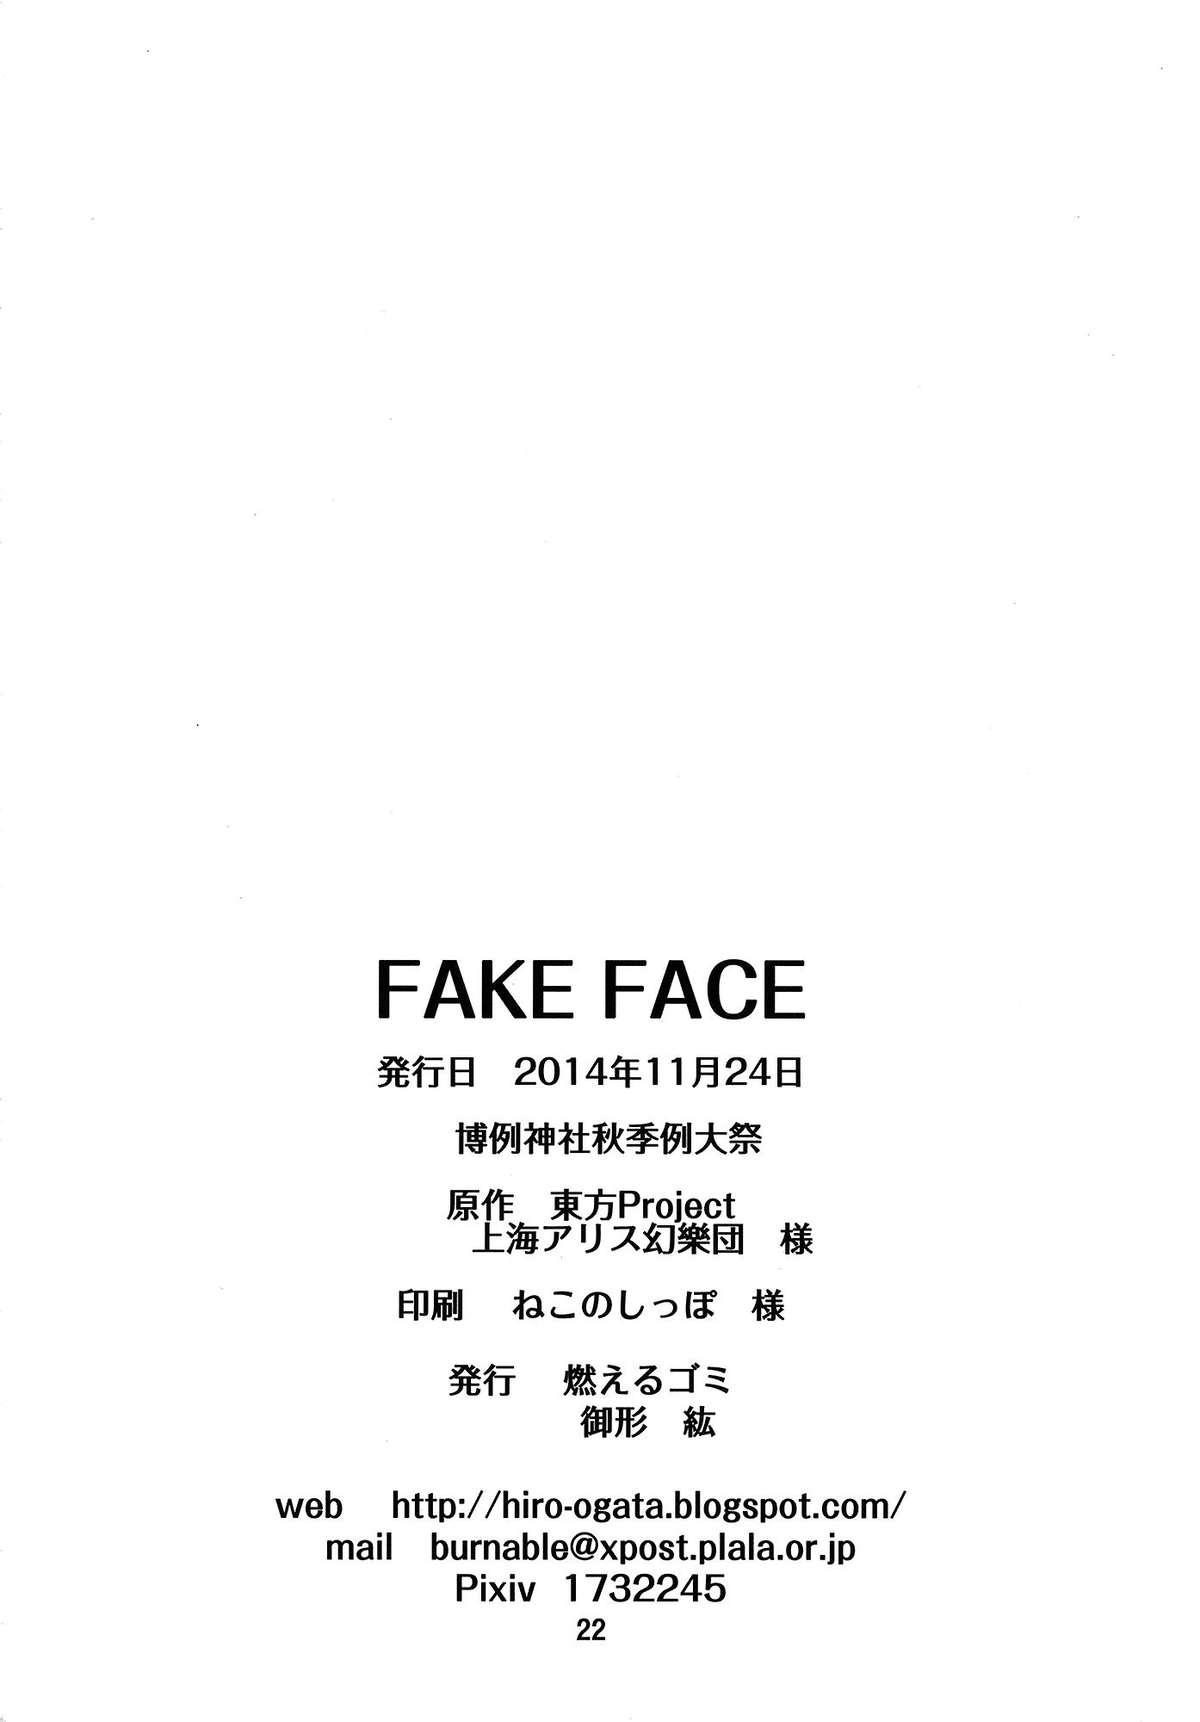 FAKE FACE 20